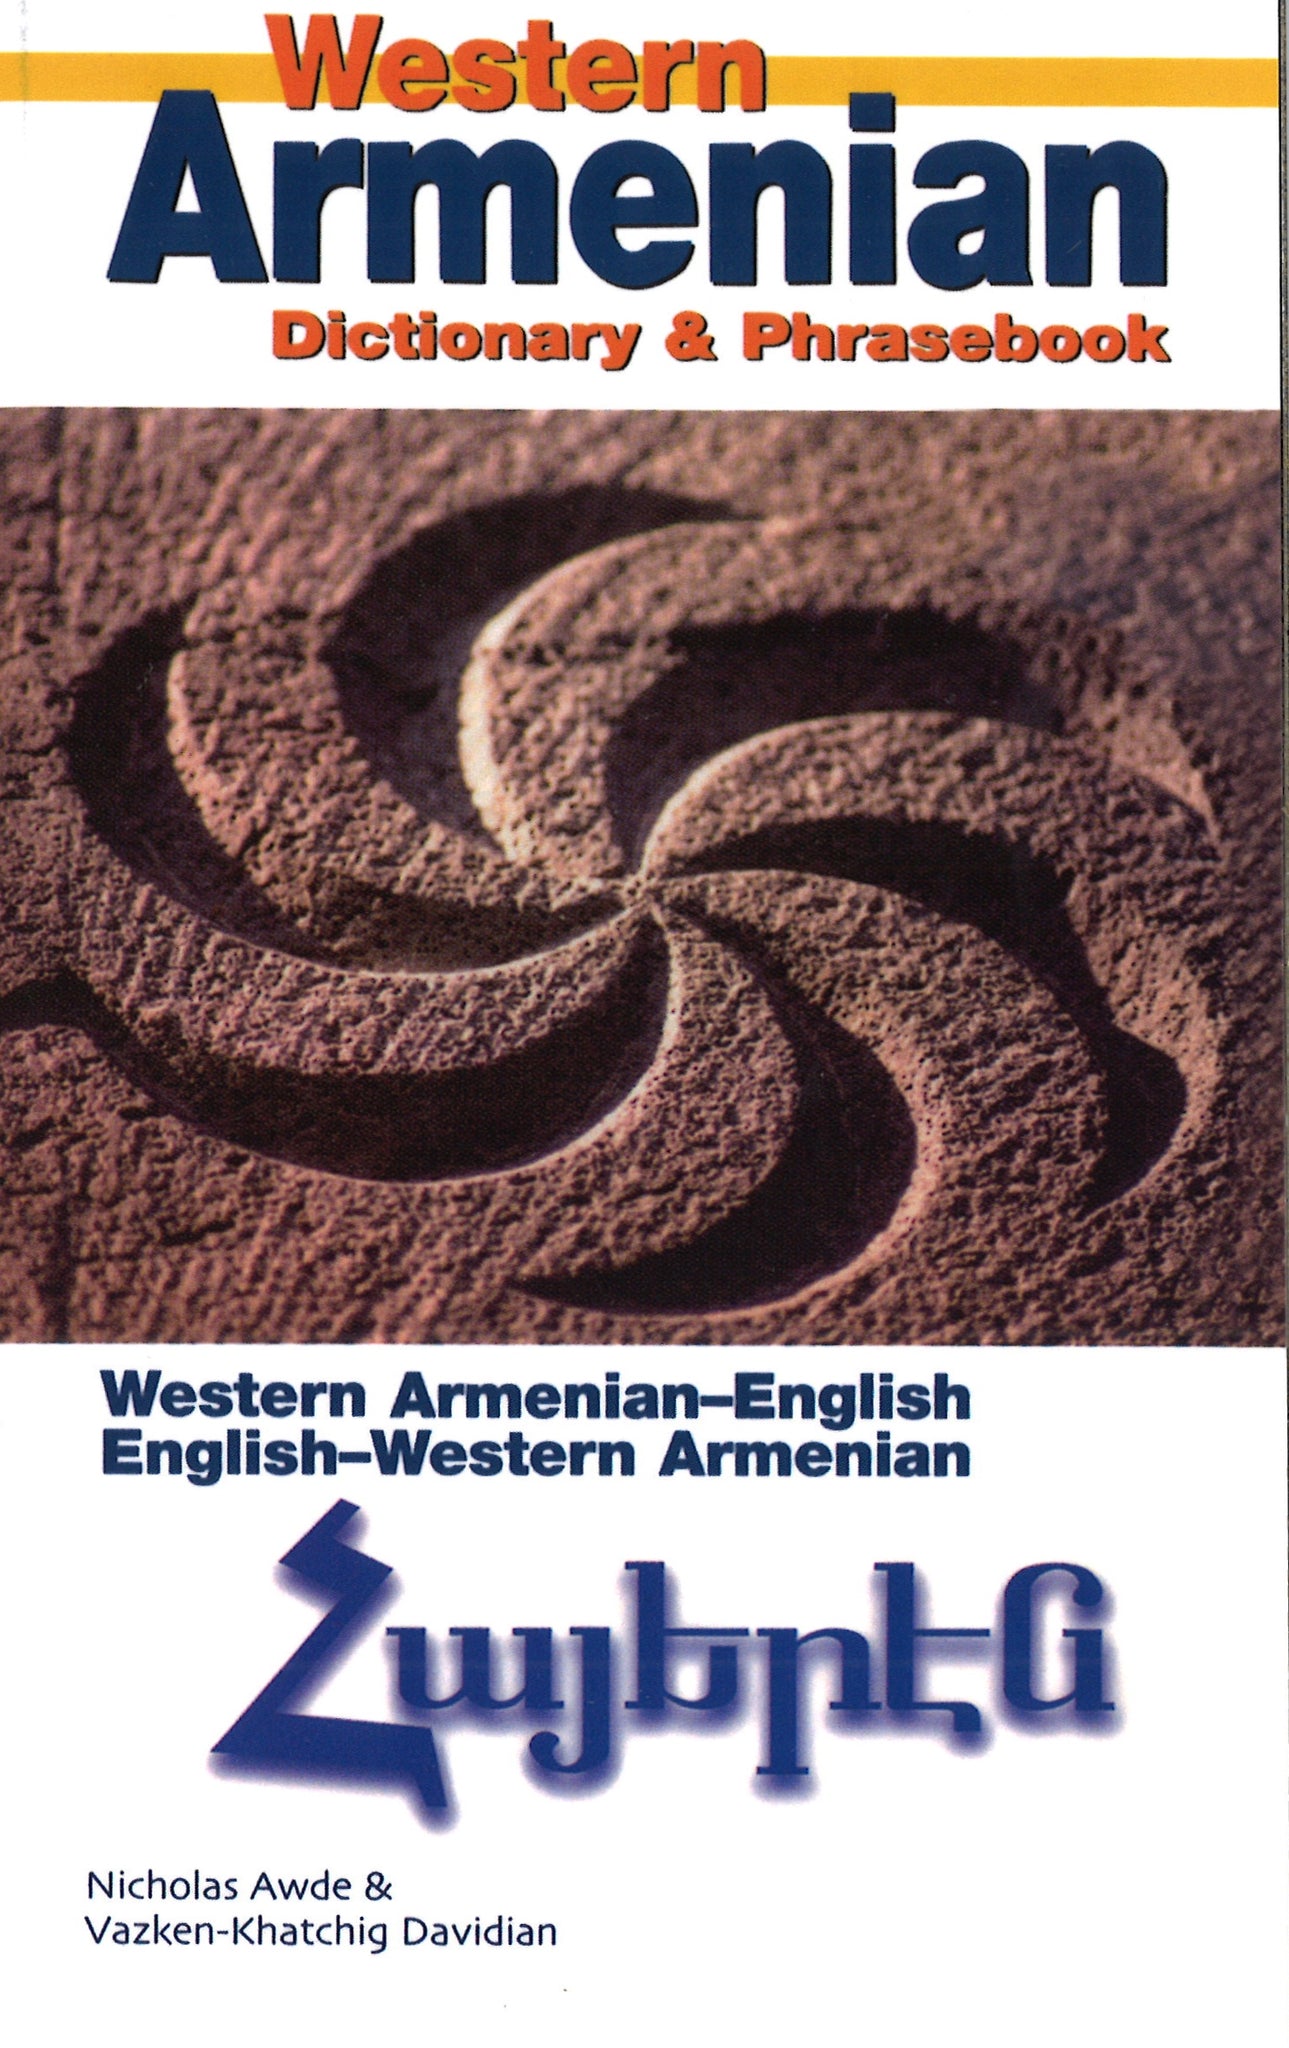 WESTERN ARMENIAN DICTIONARY AND PHRASEBOOK